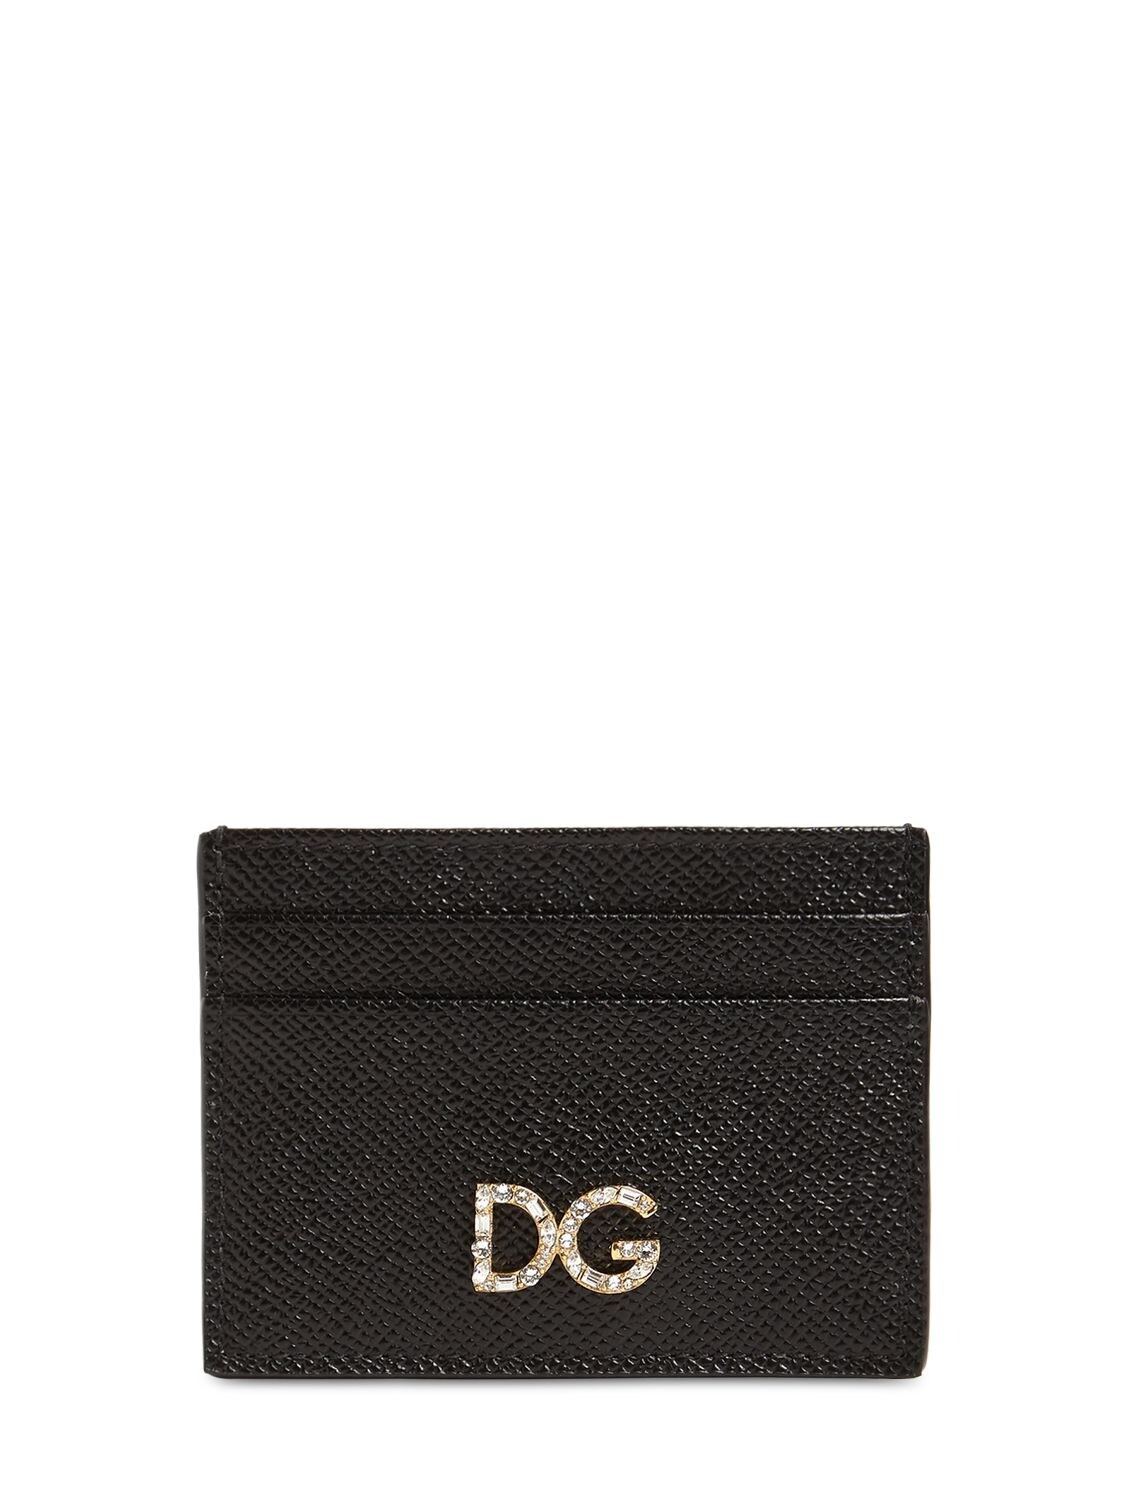 Dolce & Gabbana Dauphine Leather Card Holder W/ Logo In Black